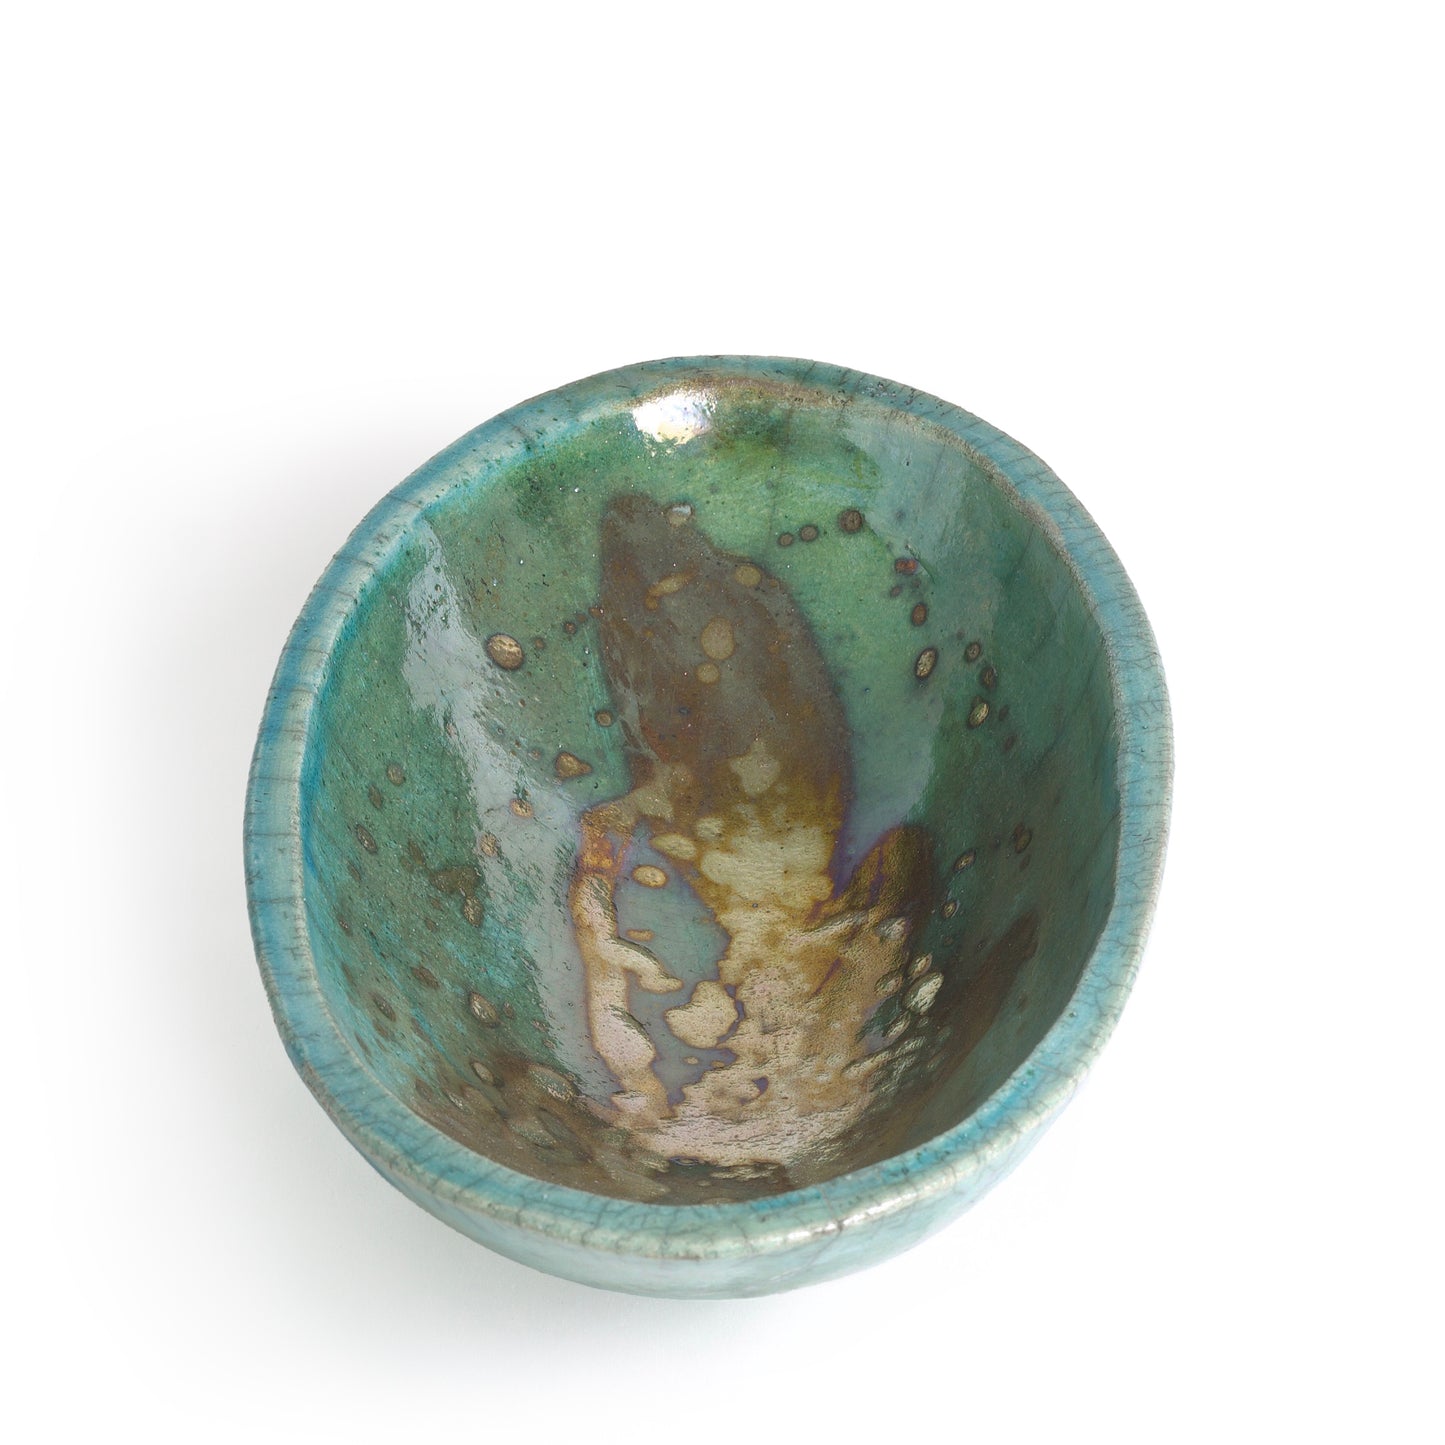 Japanese Modern Long Bowl Legged Raku Ceramic Green Copper